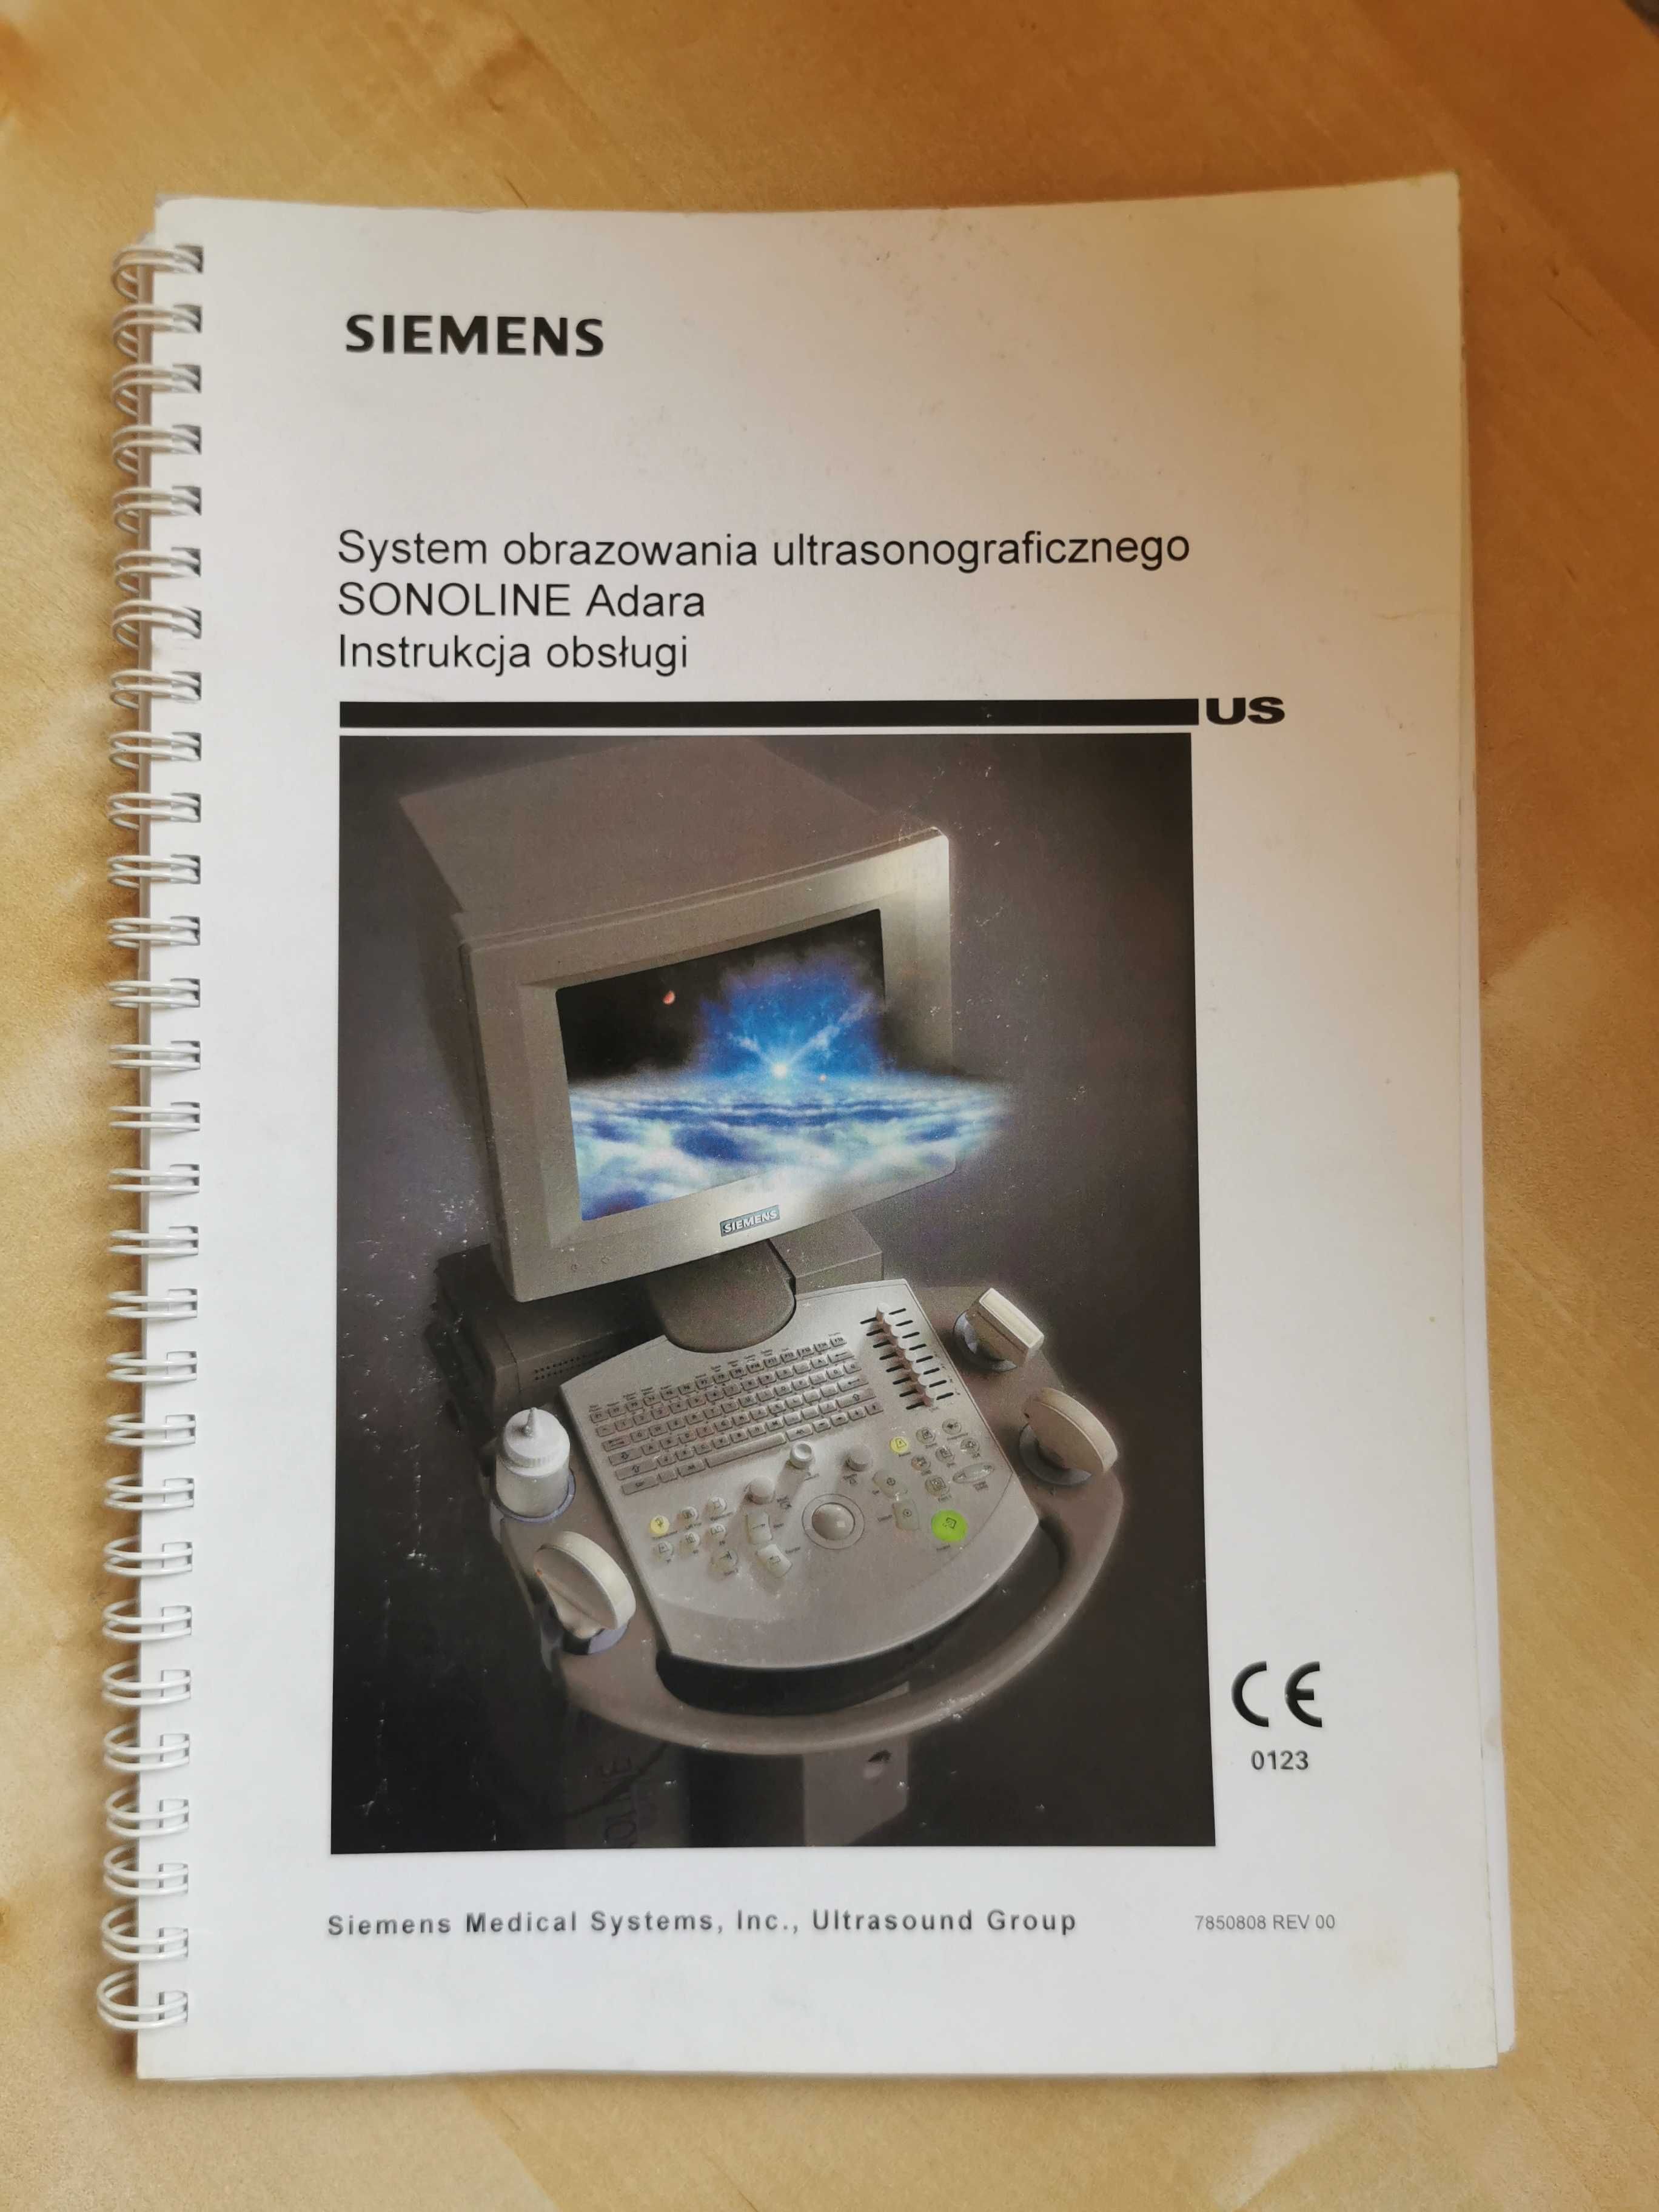 Siemens Sonoline Adara - instrukcja obsługi aparatu USG